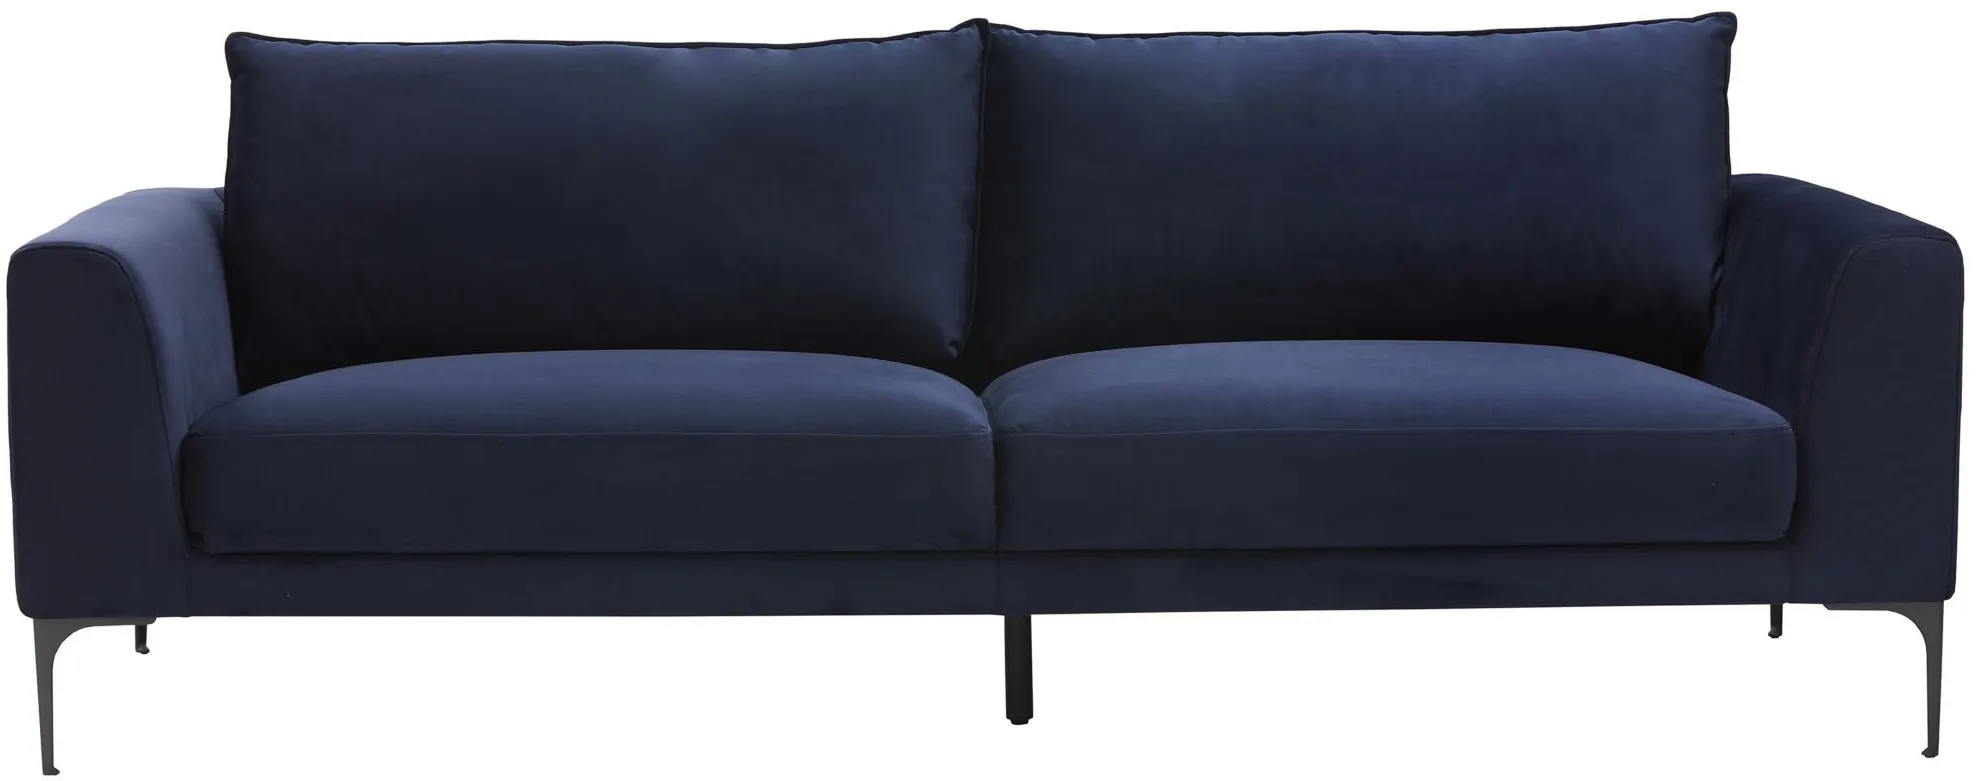 Virgo Sofa in Metropolis Blue by Sunpan